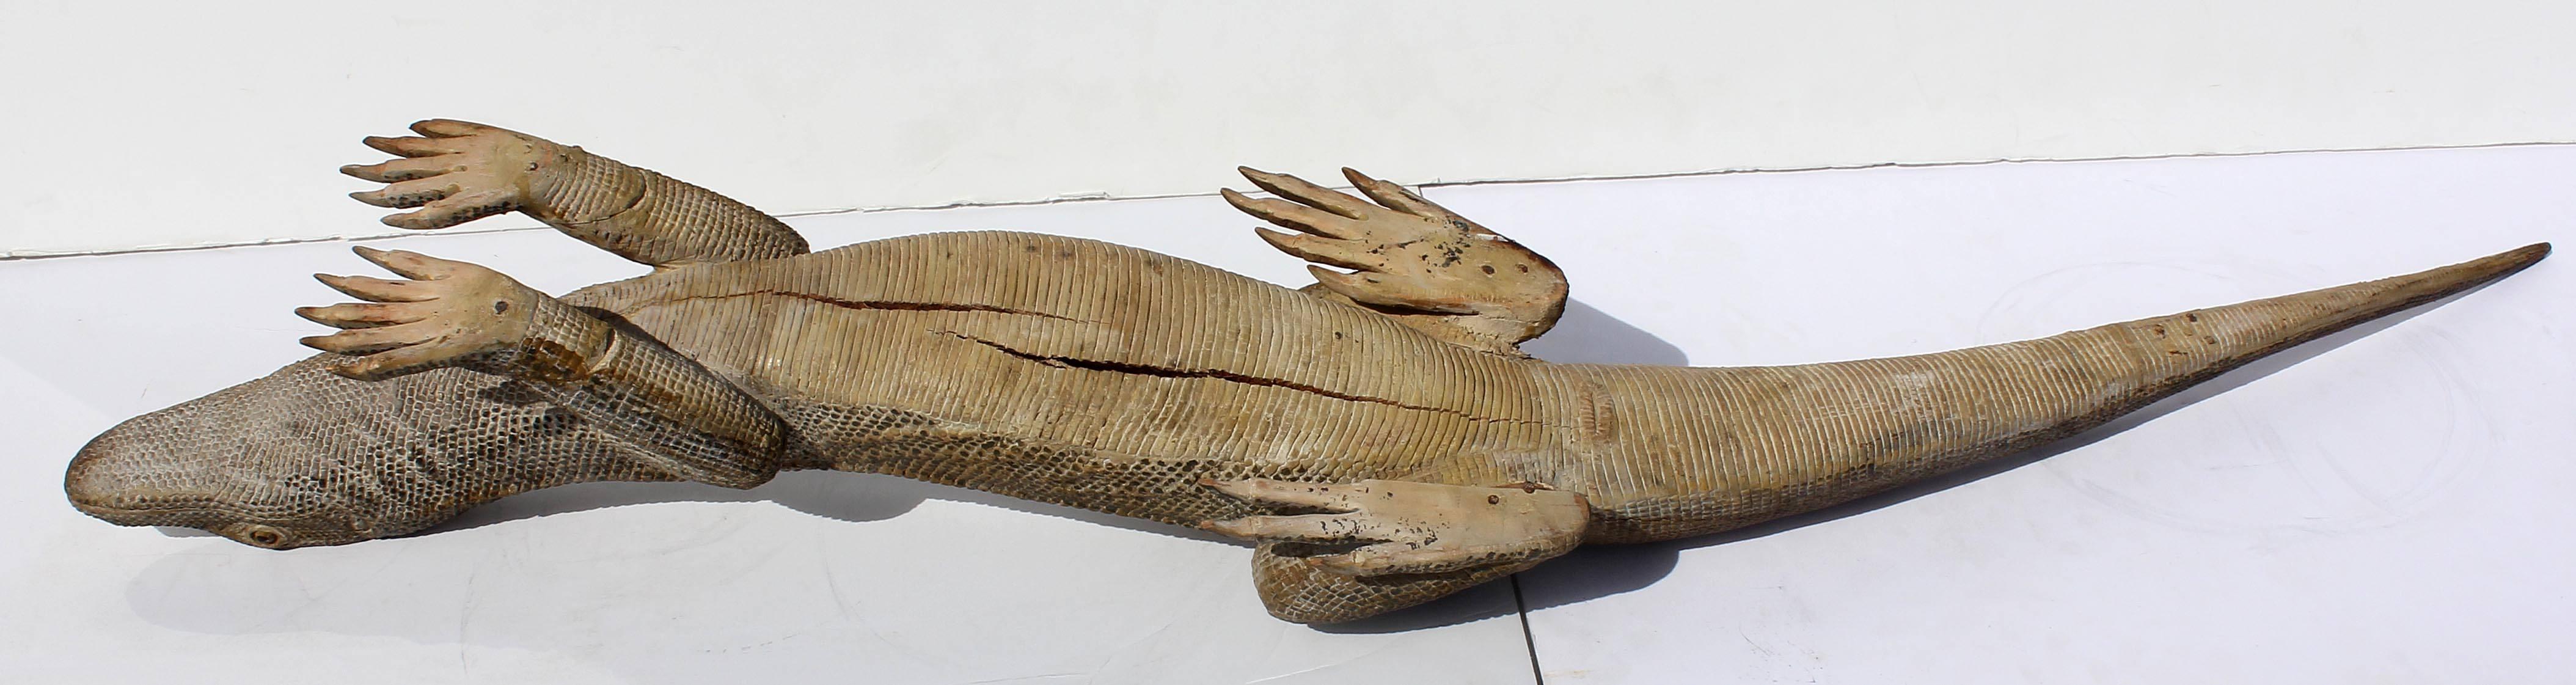 Life-Size Carved Komodo Dragon Sculpture 2